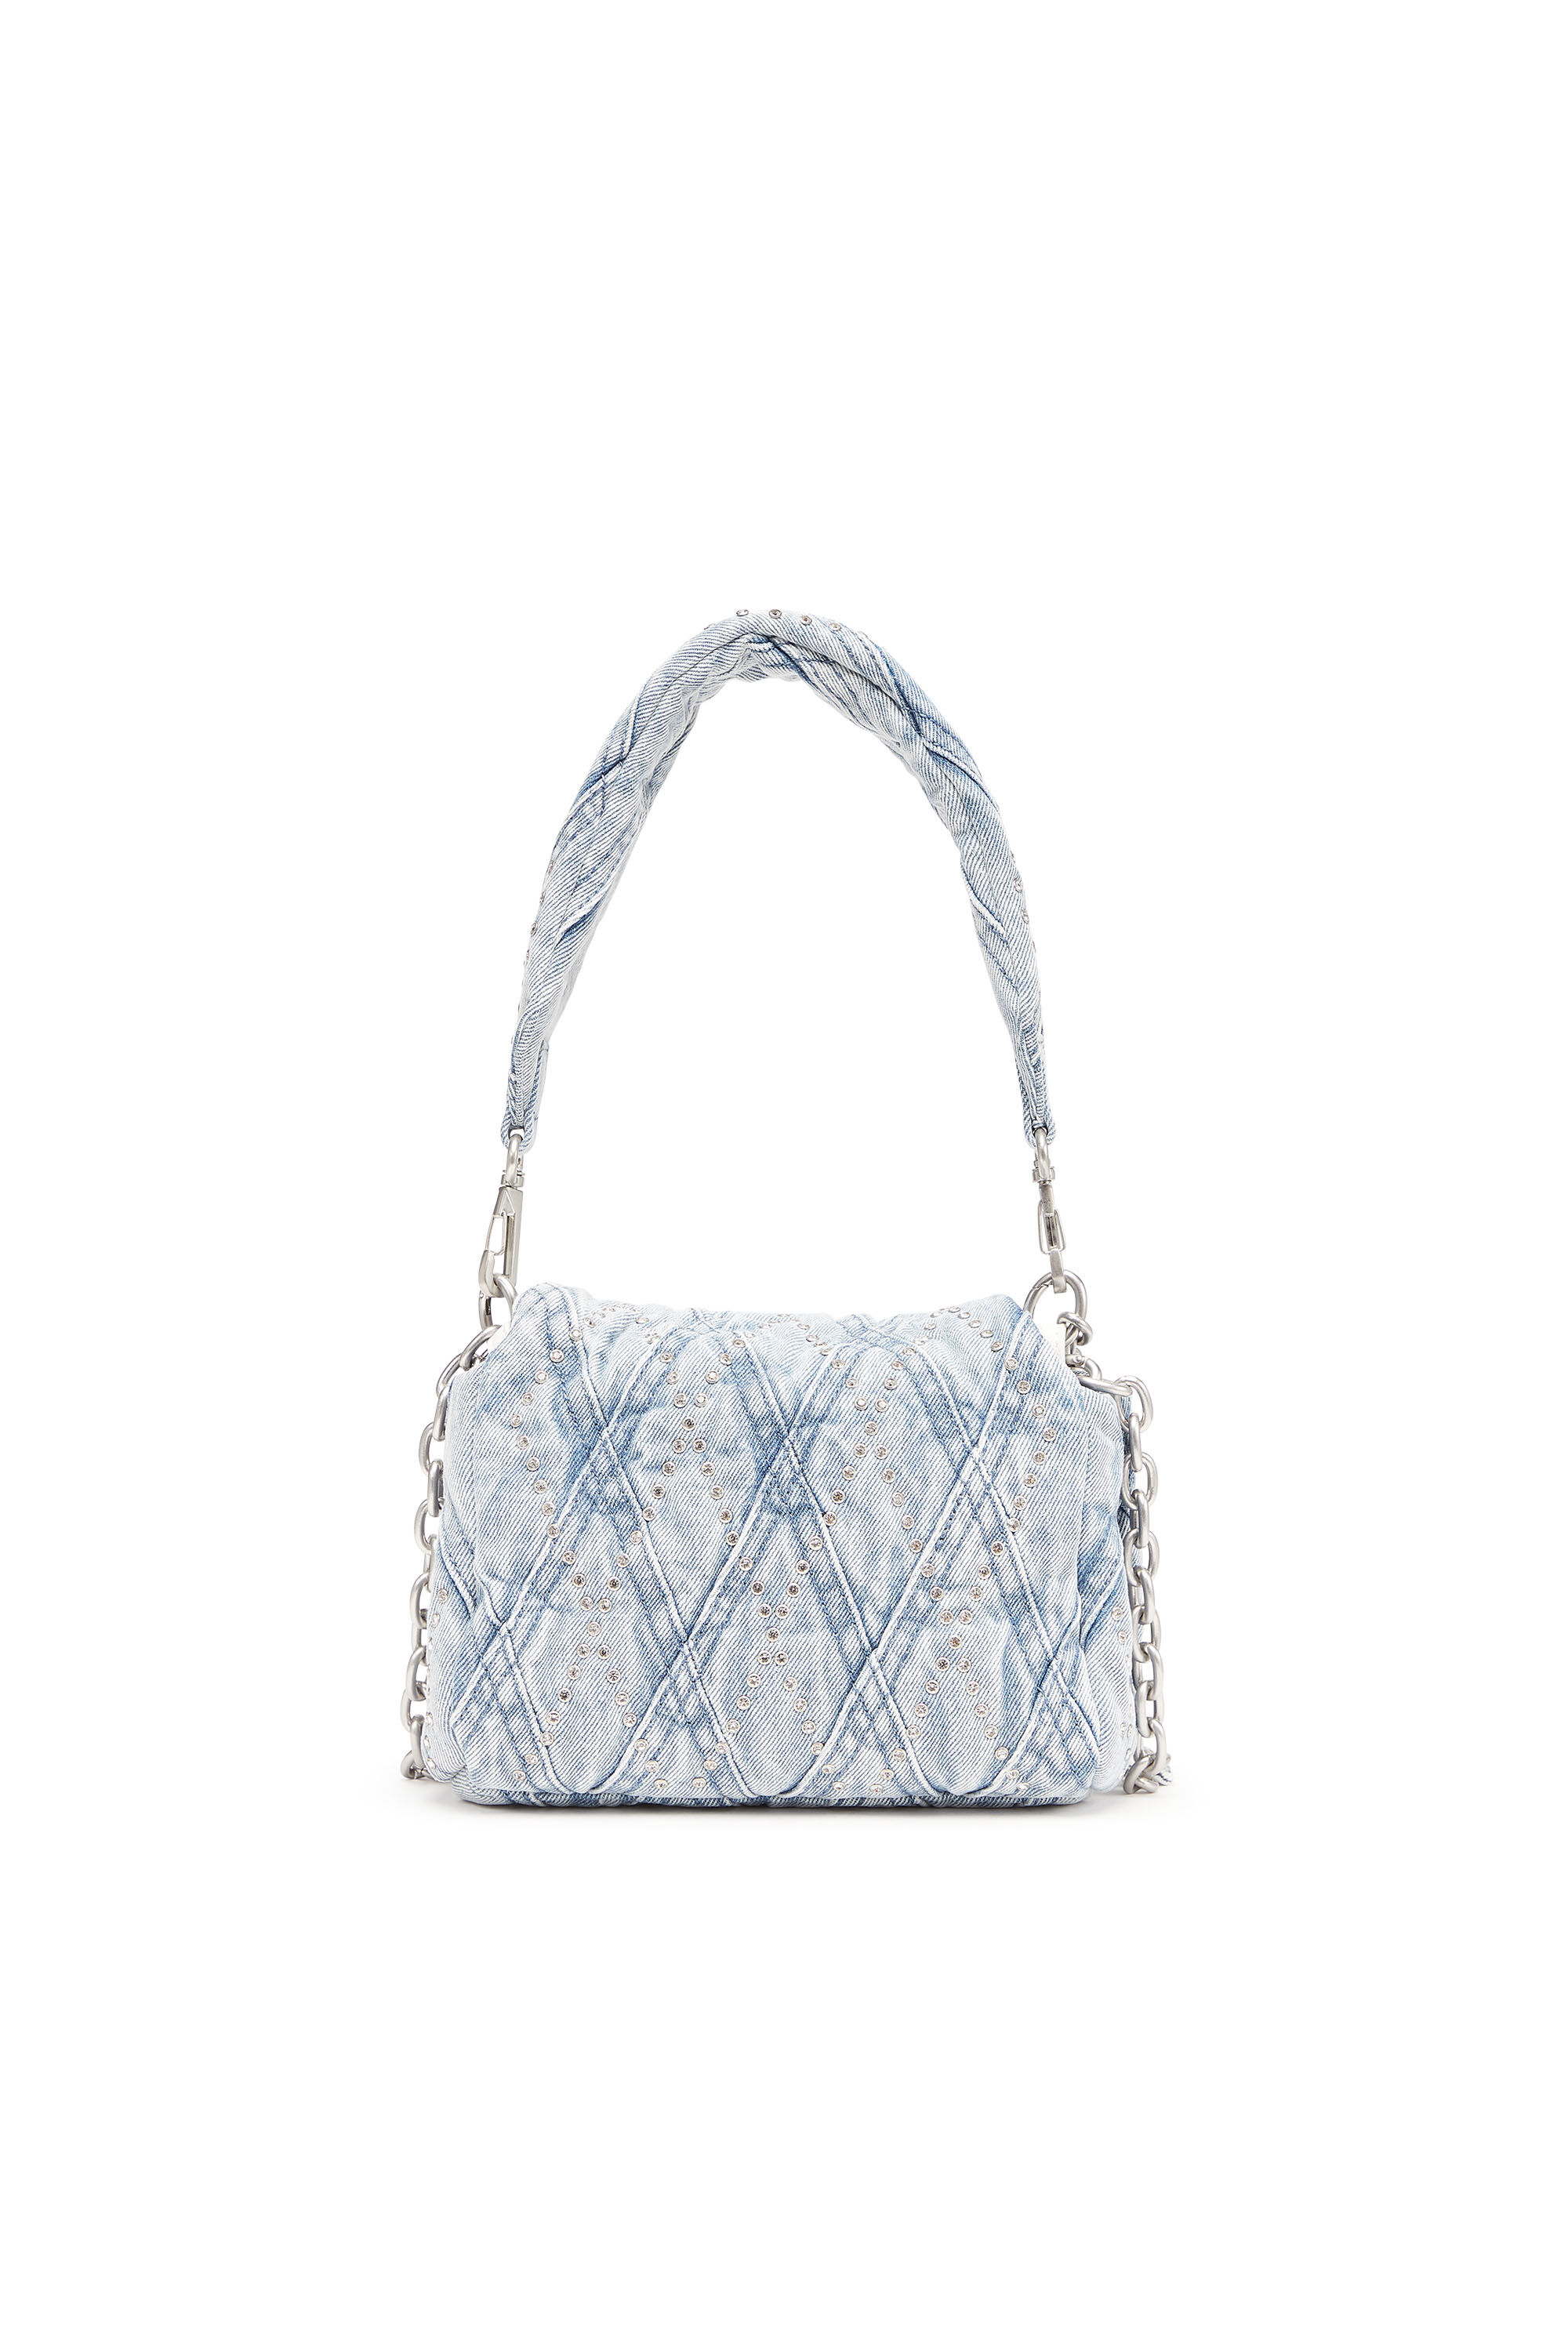 Chanel Denim Large 19 Flap Bag - Blue Shoulder Bags, Handbags